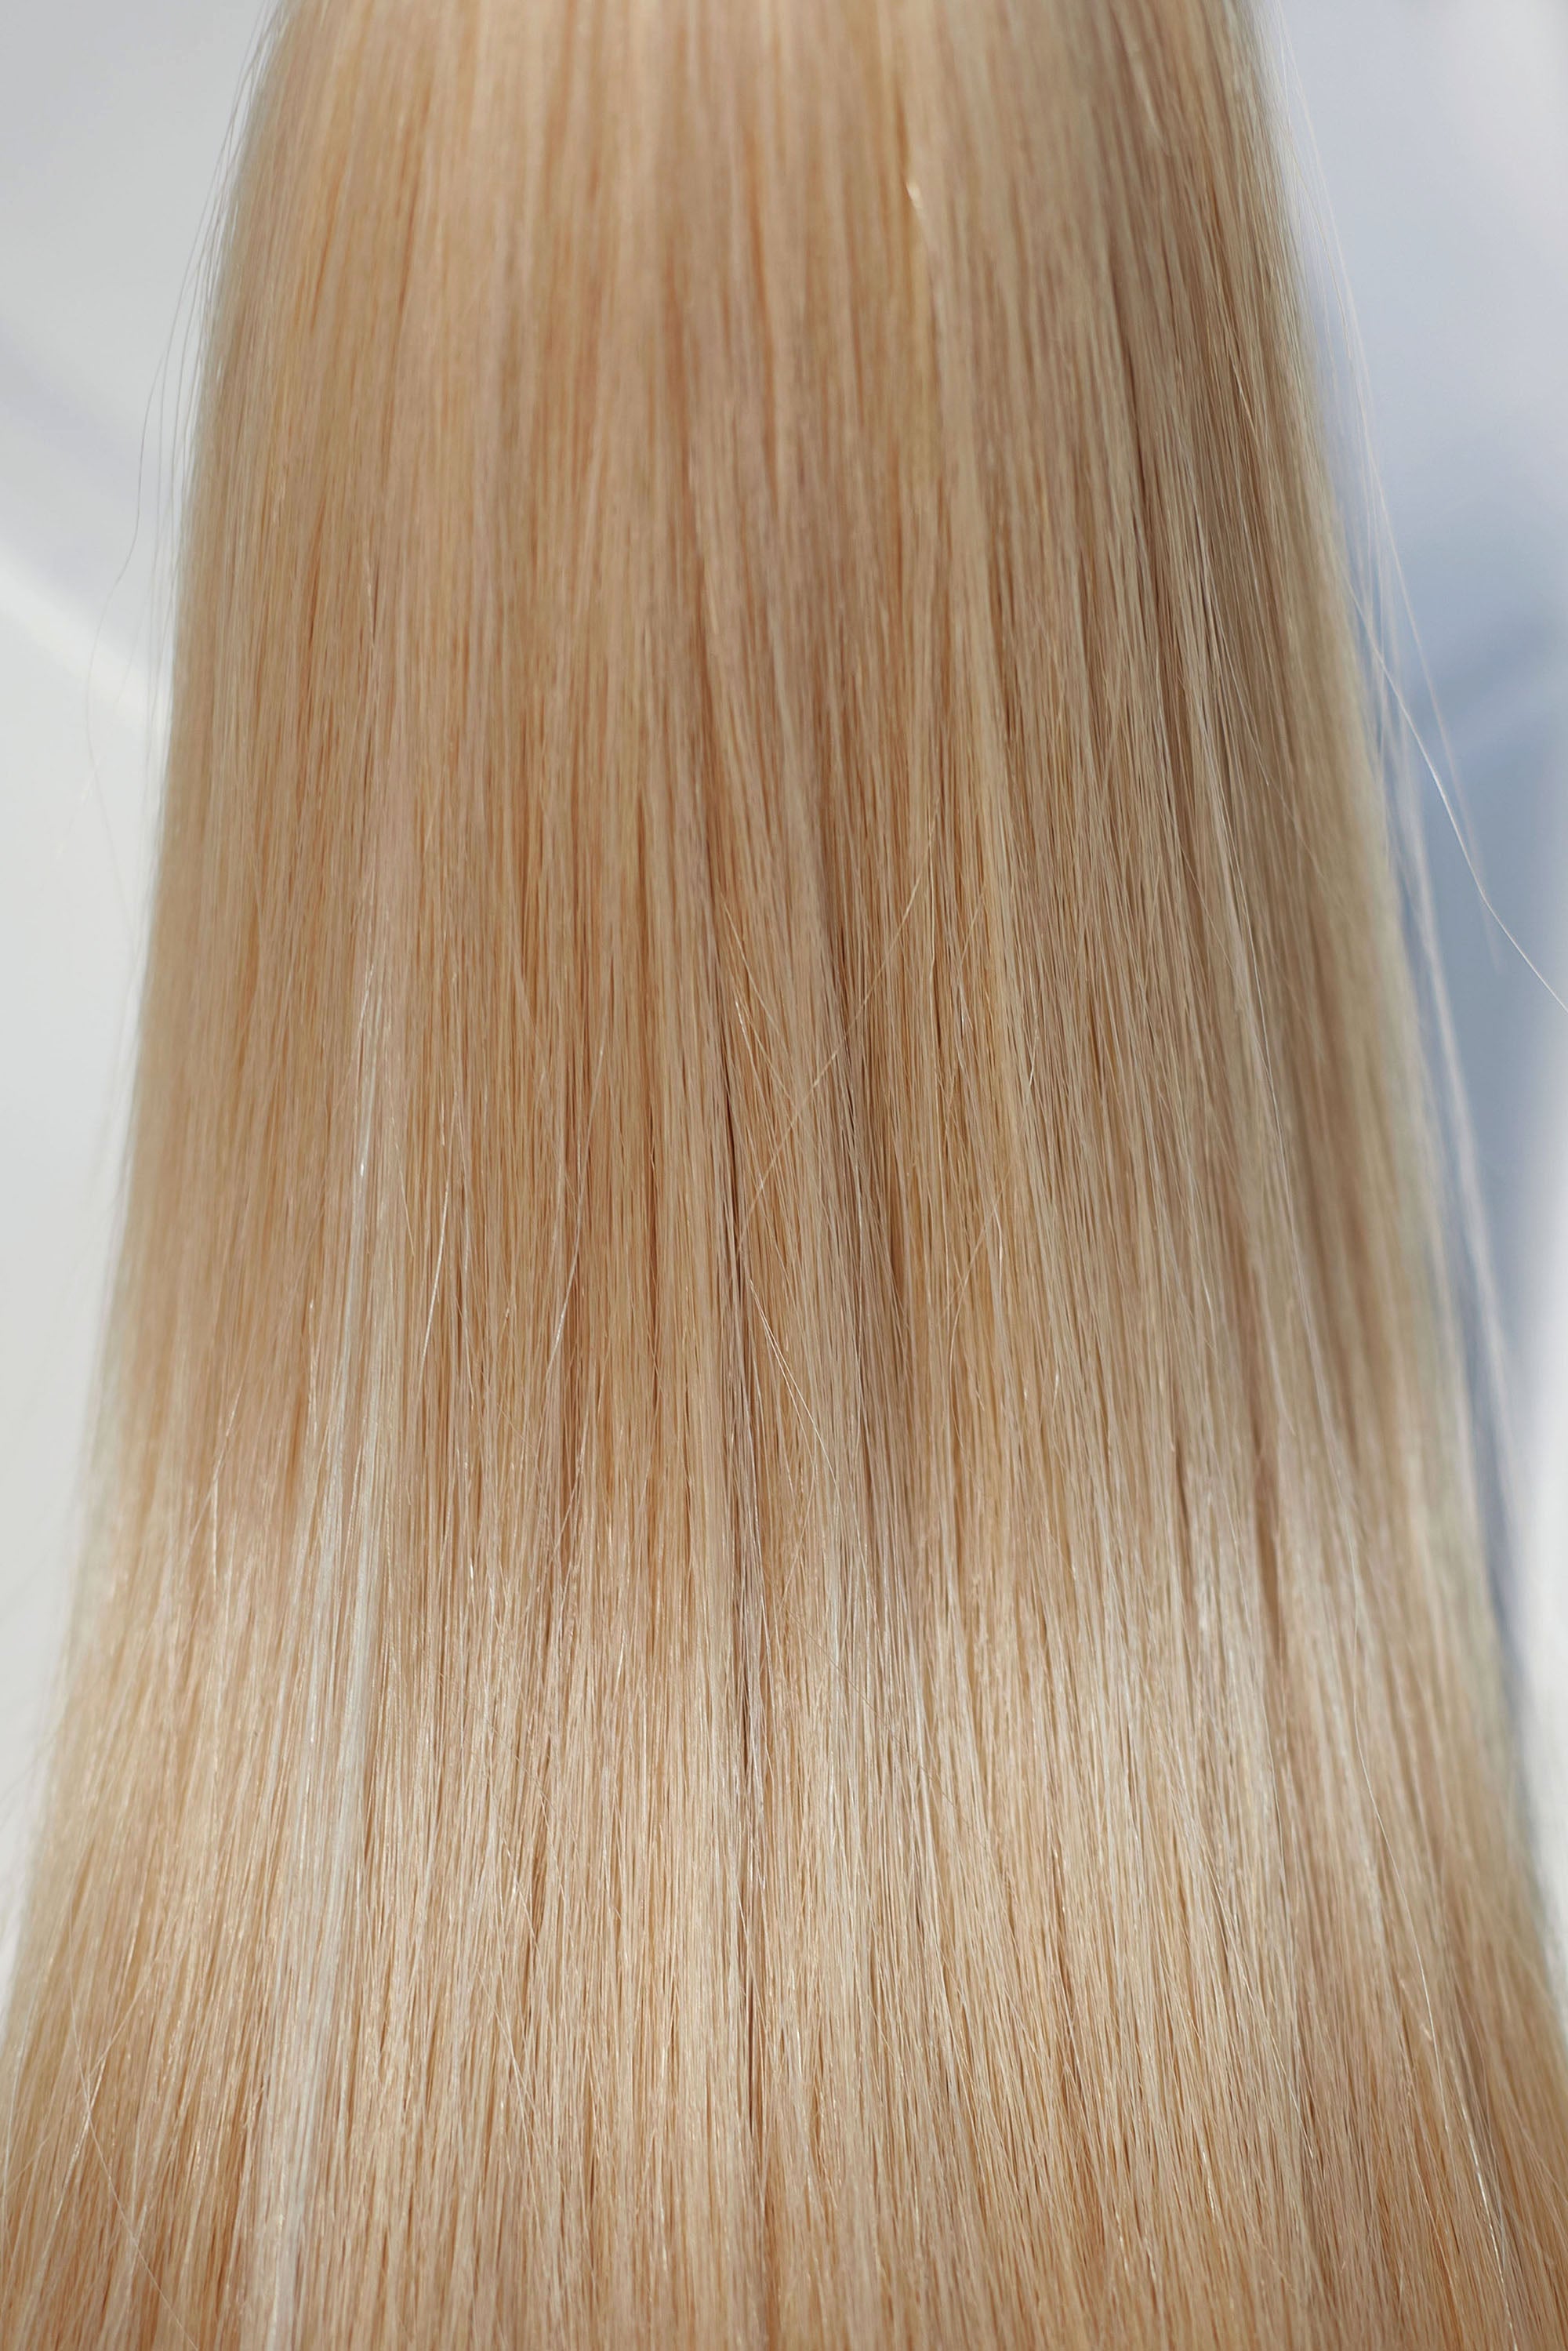 Behair professional Keratin Tip "Premium" 18" (45cm) Natural Straight Light Gold Blond #24 - 25g (1g each pcs) hair extensions